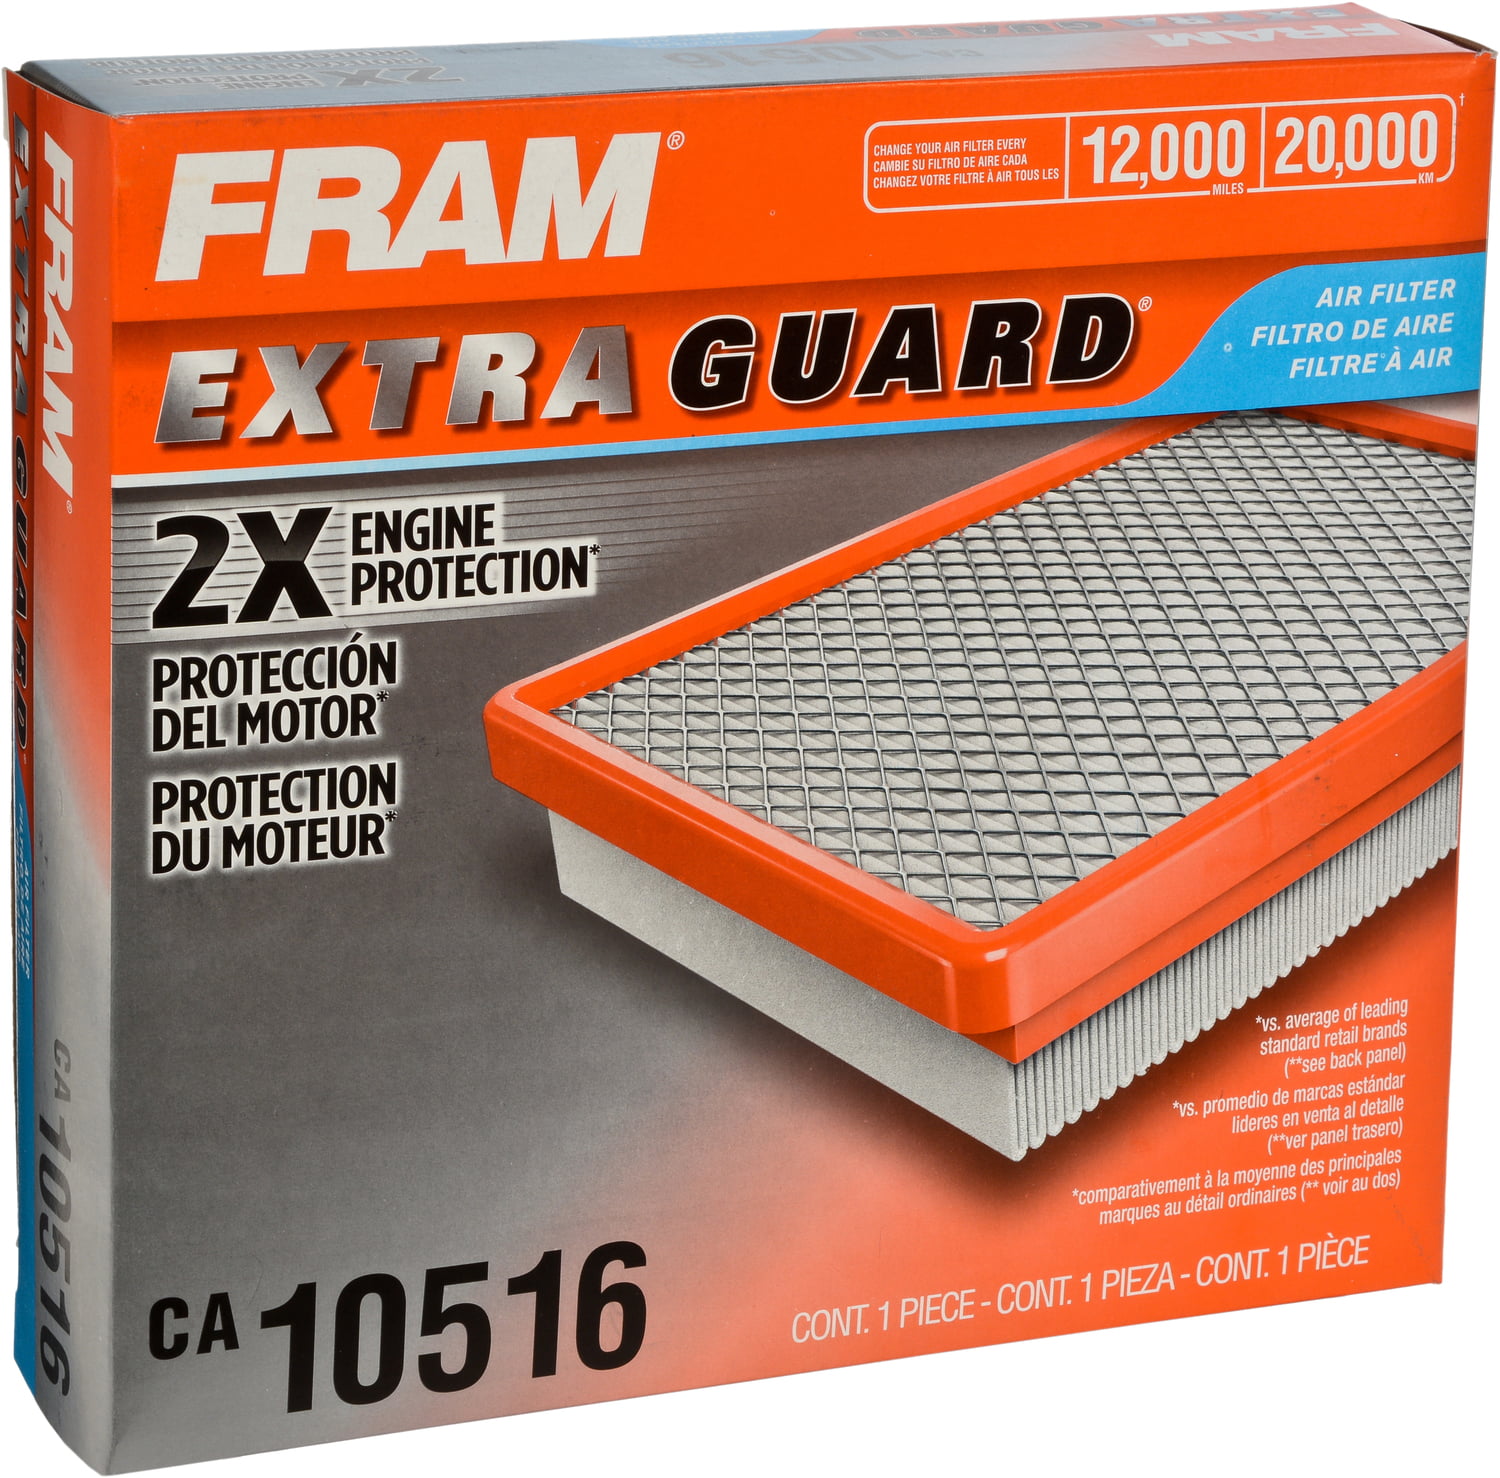 FRAM CA10346 Extra Guard Flexible Rectangular Panel Air Filter 